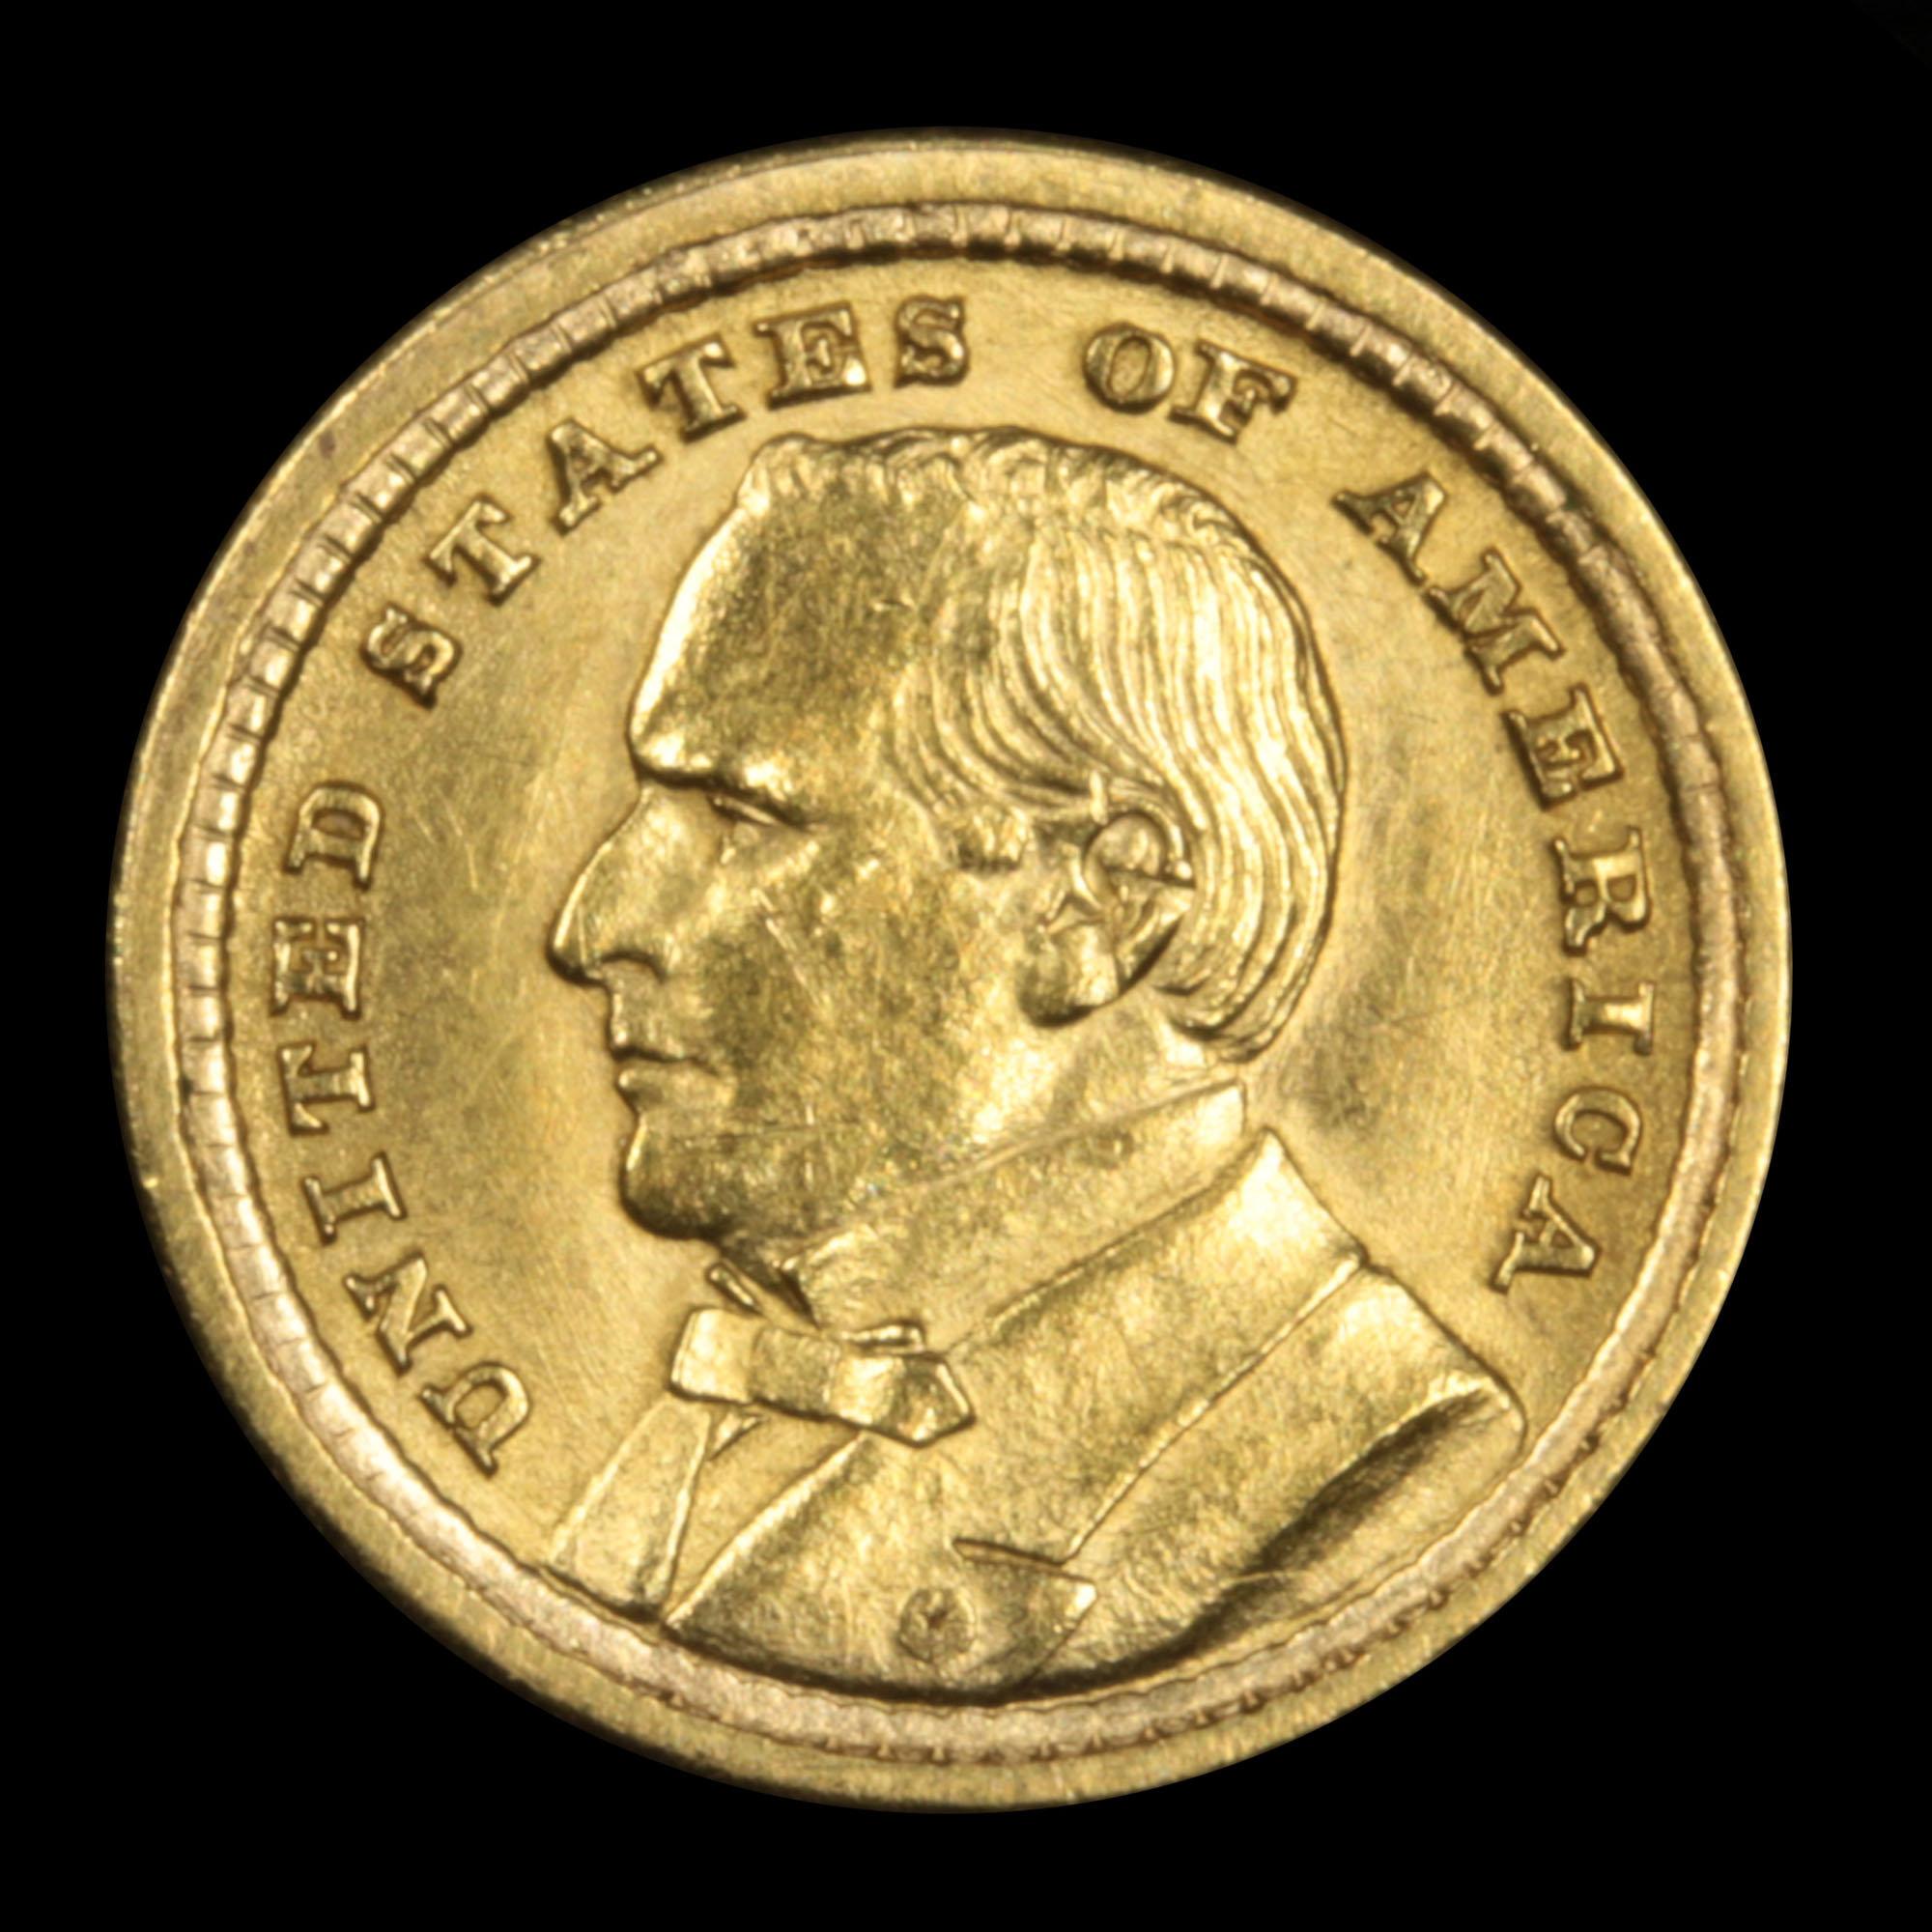 ***Auction Highlight*** 1903 Mckinley LA Purchase Gold commem $1 Graded Choice Unc USCG (fc)